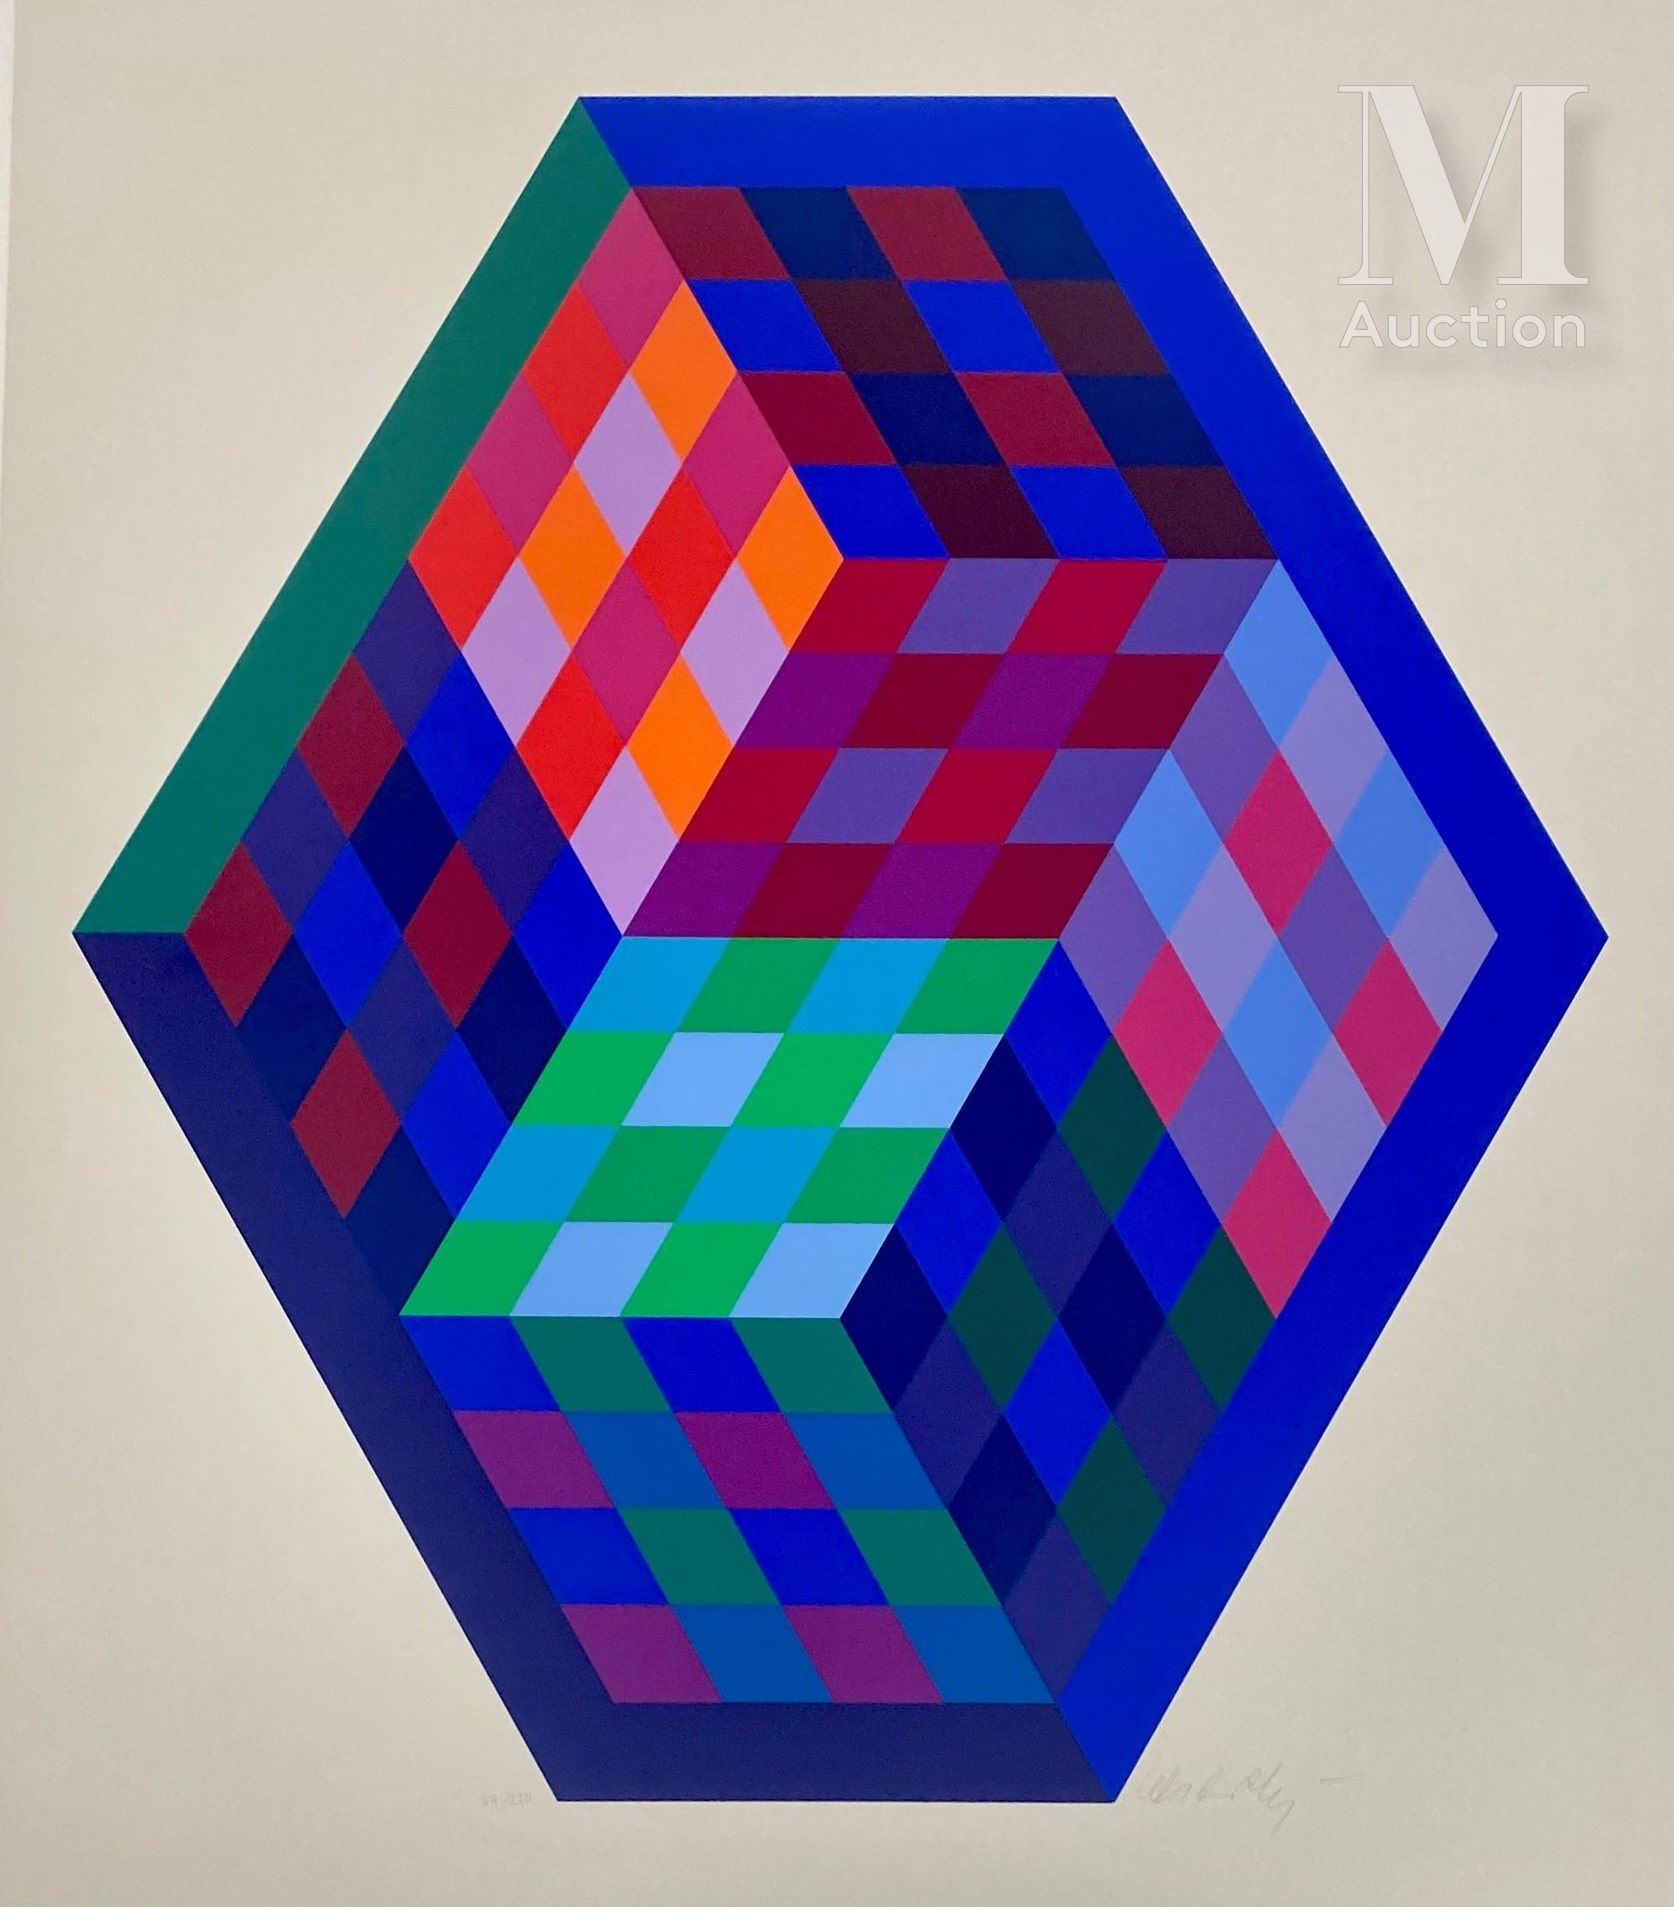 Victor VASARELY (1908-1997) KOEB-M.C

彩色丝网印刷，签名和编号为39/250

72 x 62 cm